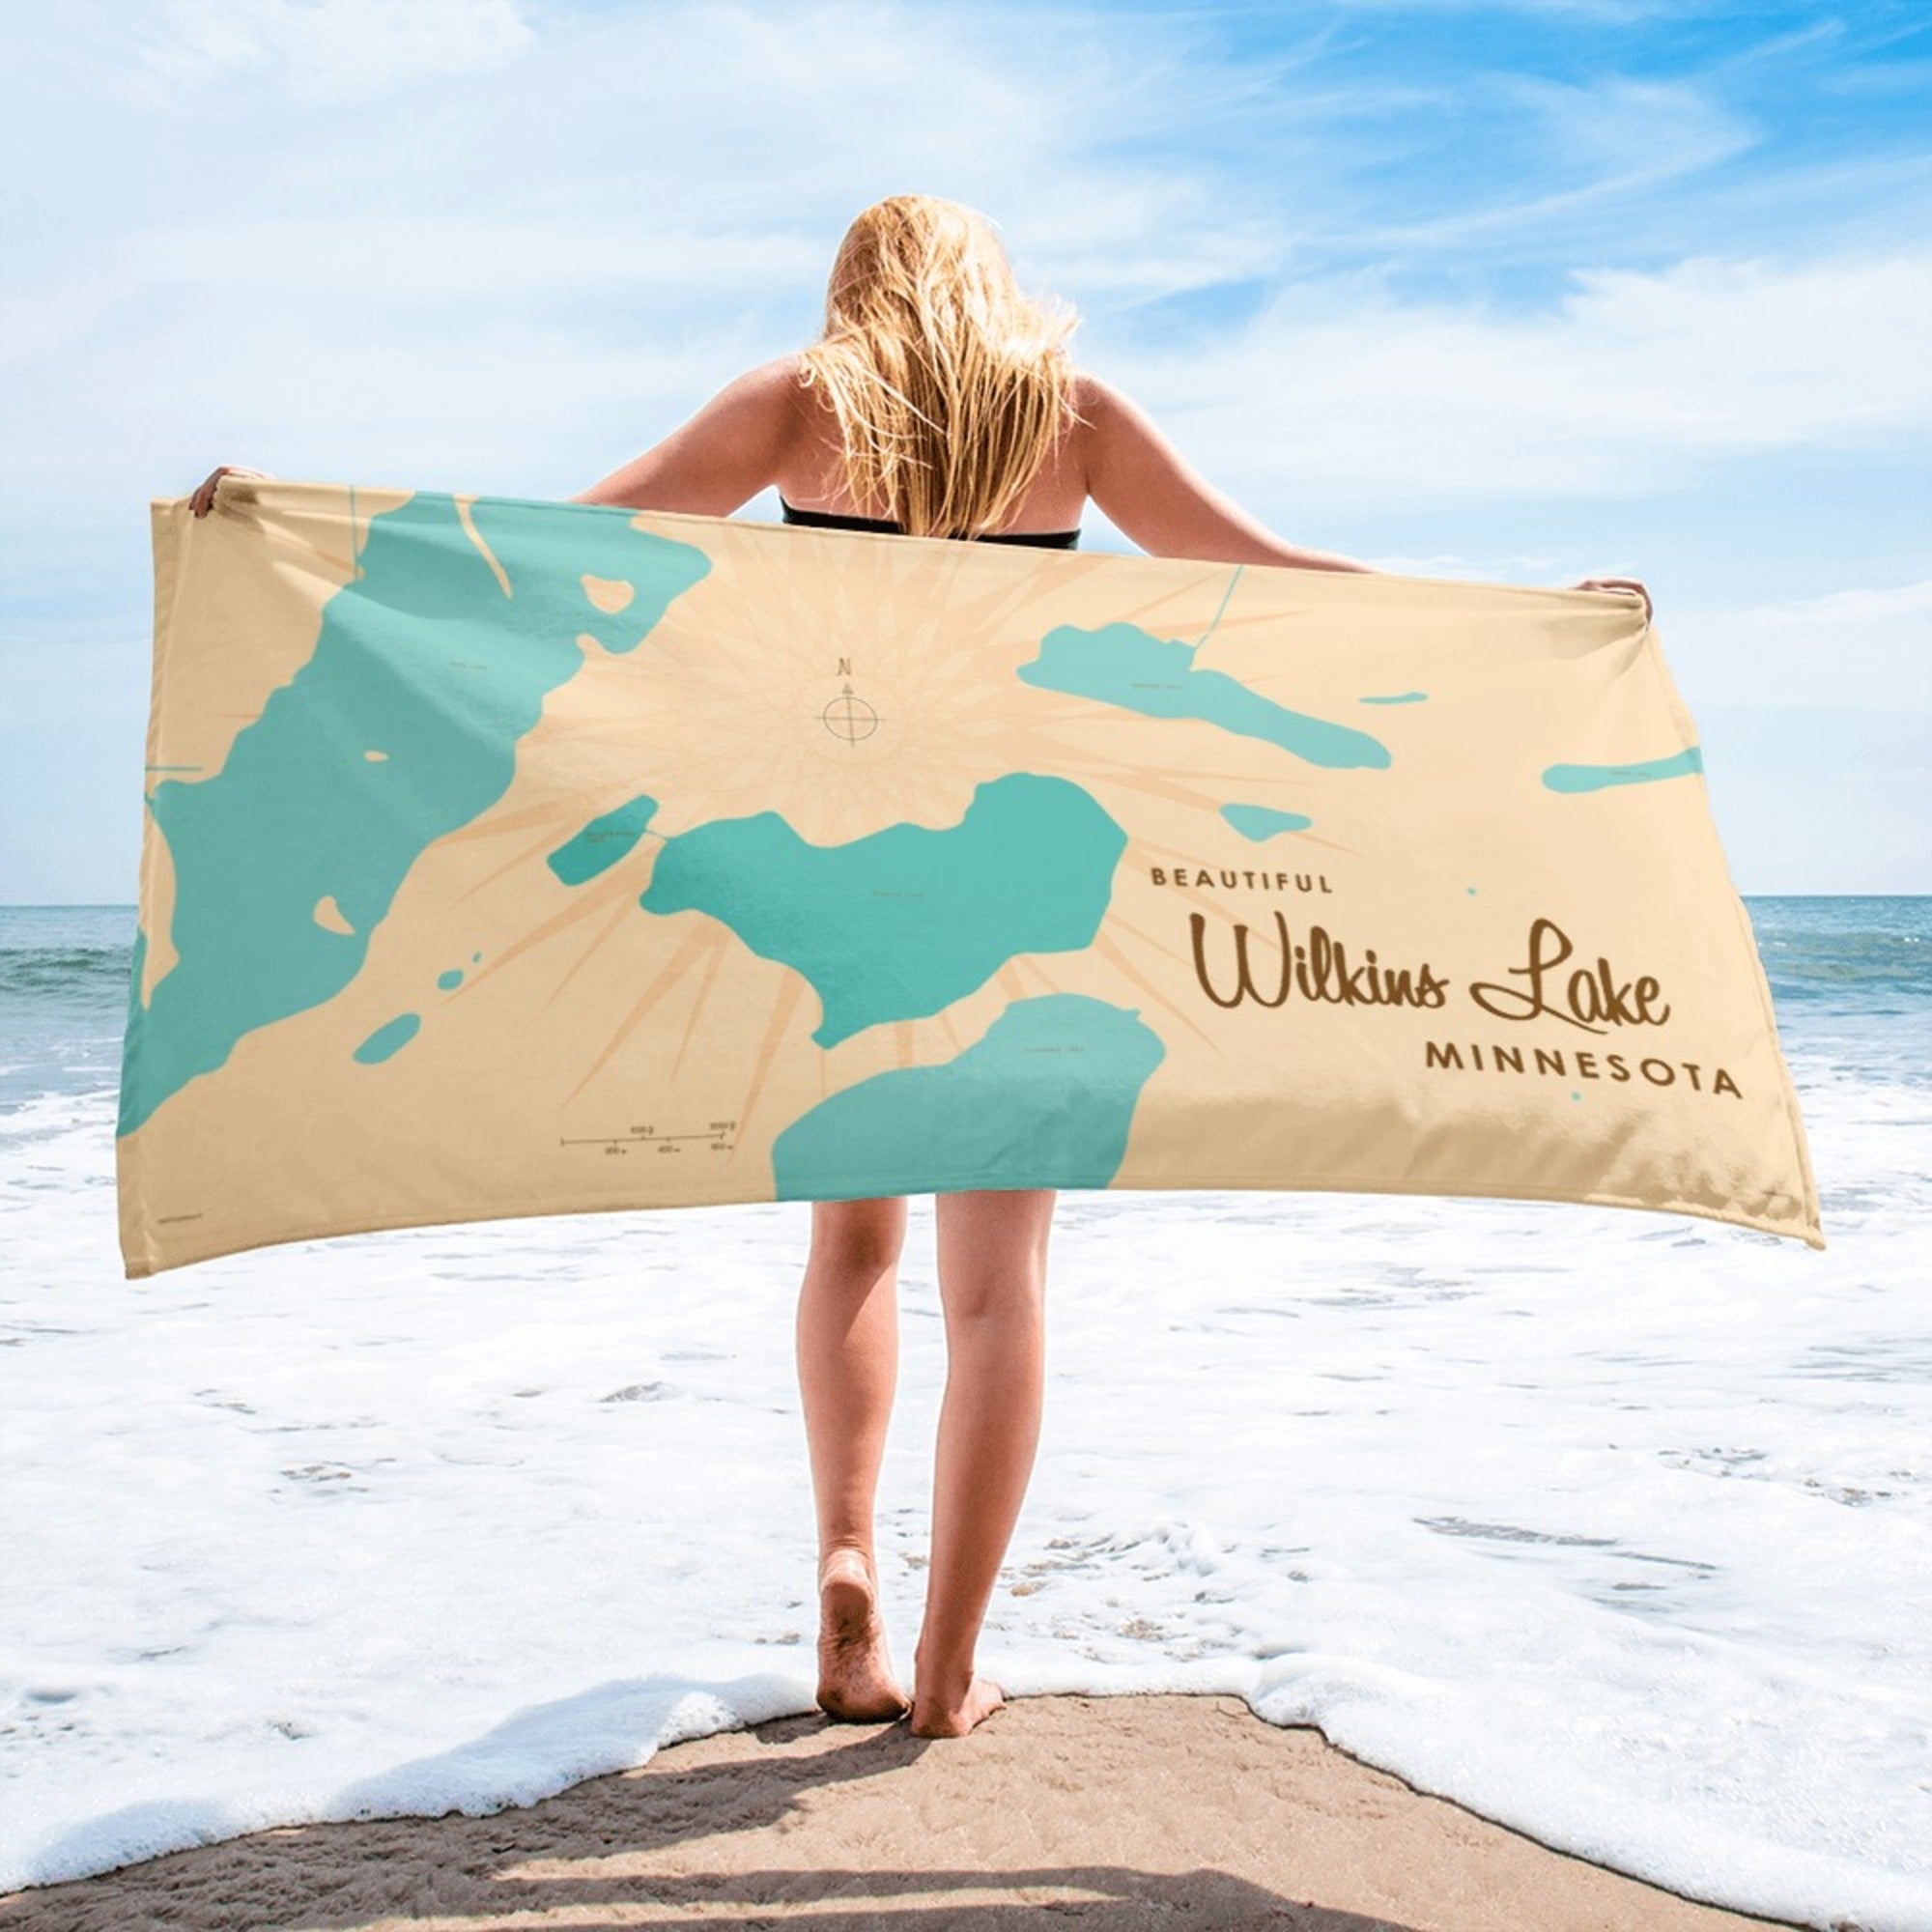 Wilkins Lake Minnesota Beach Towel